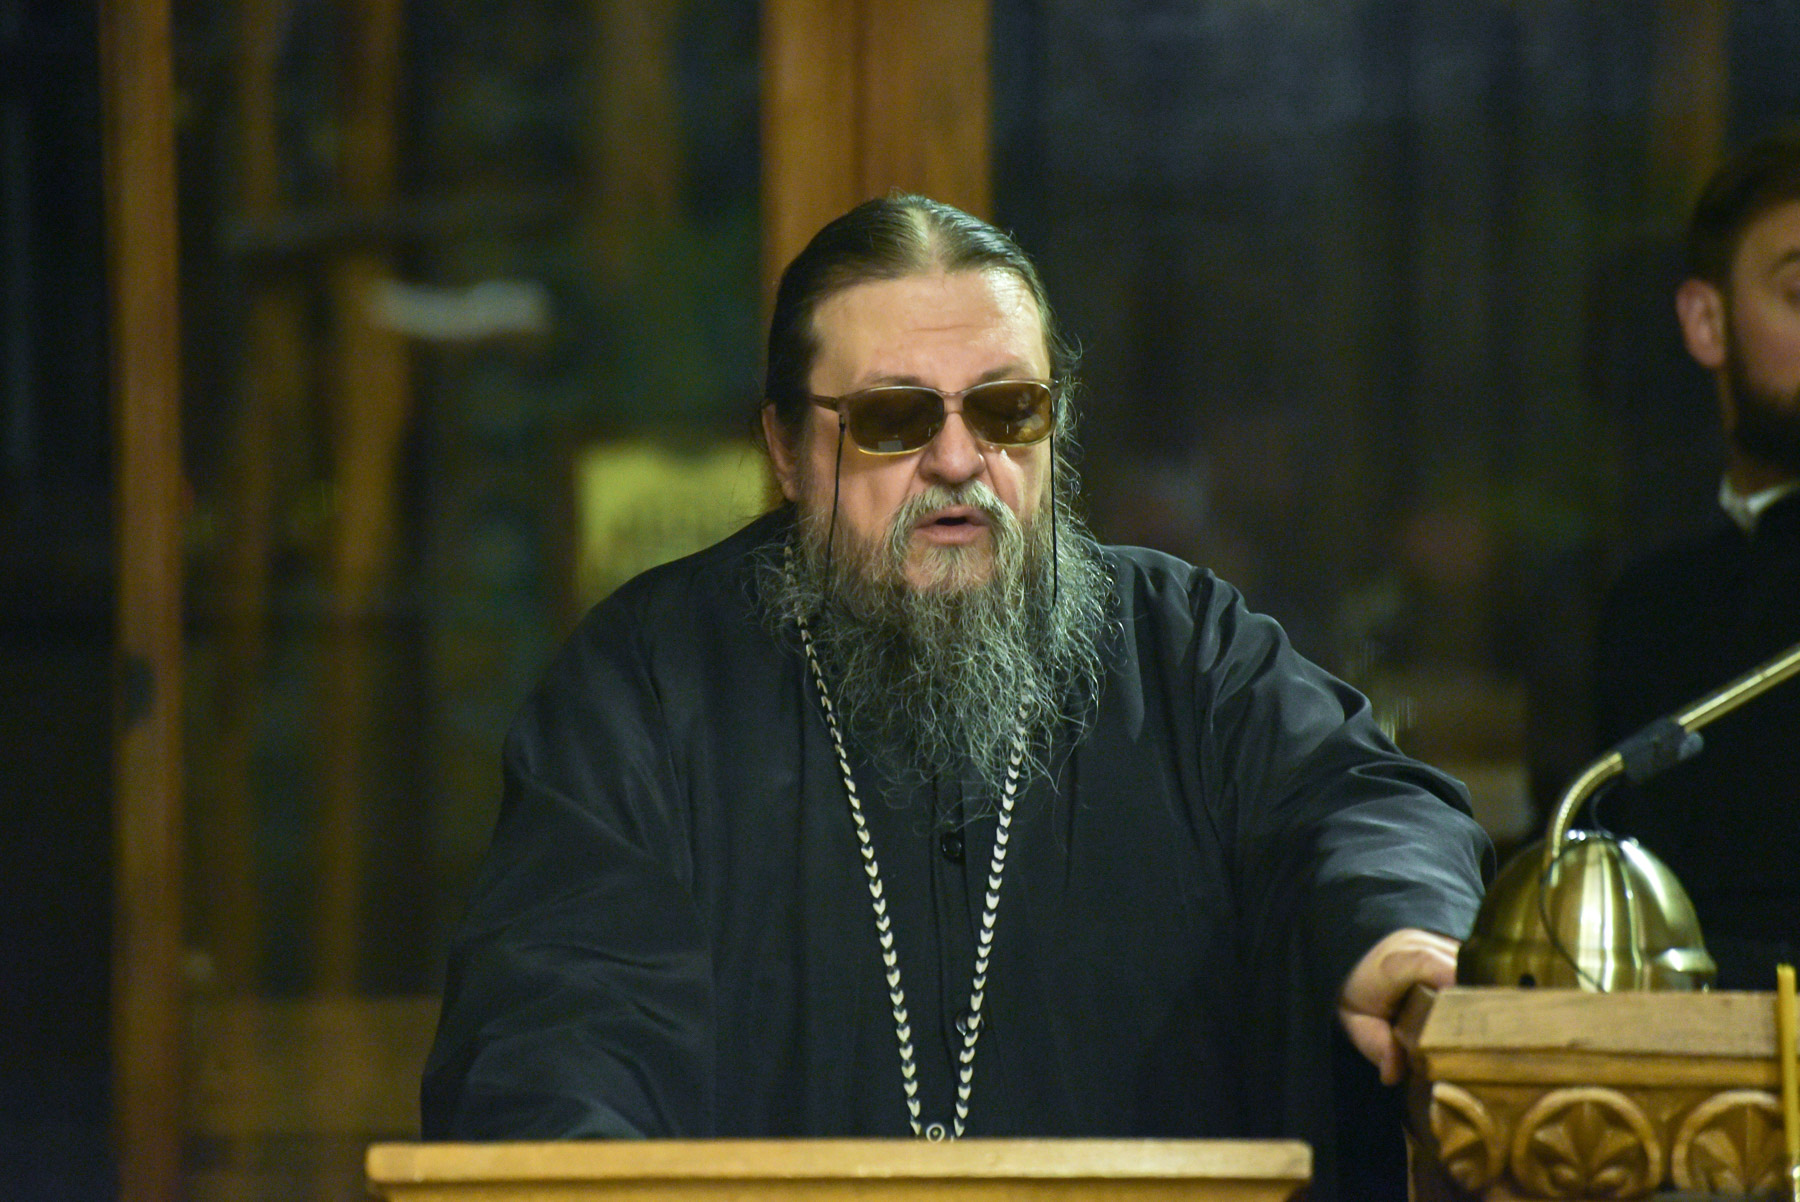 photos of orthodox christmas 0276